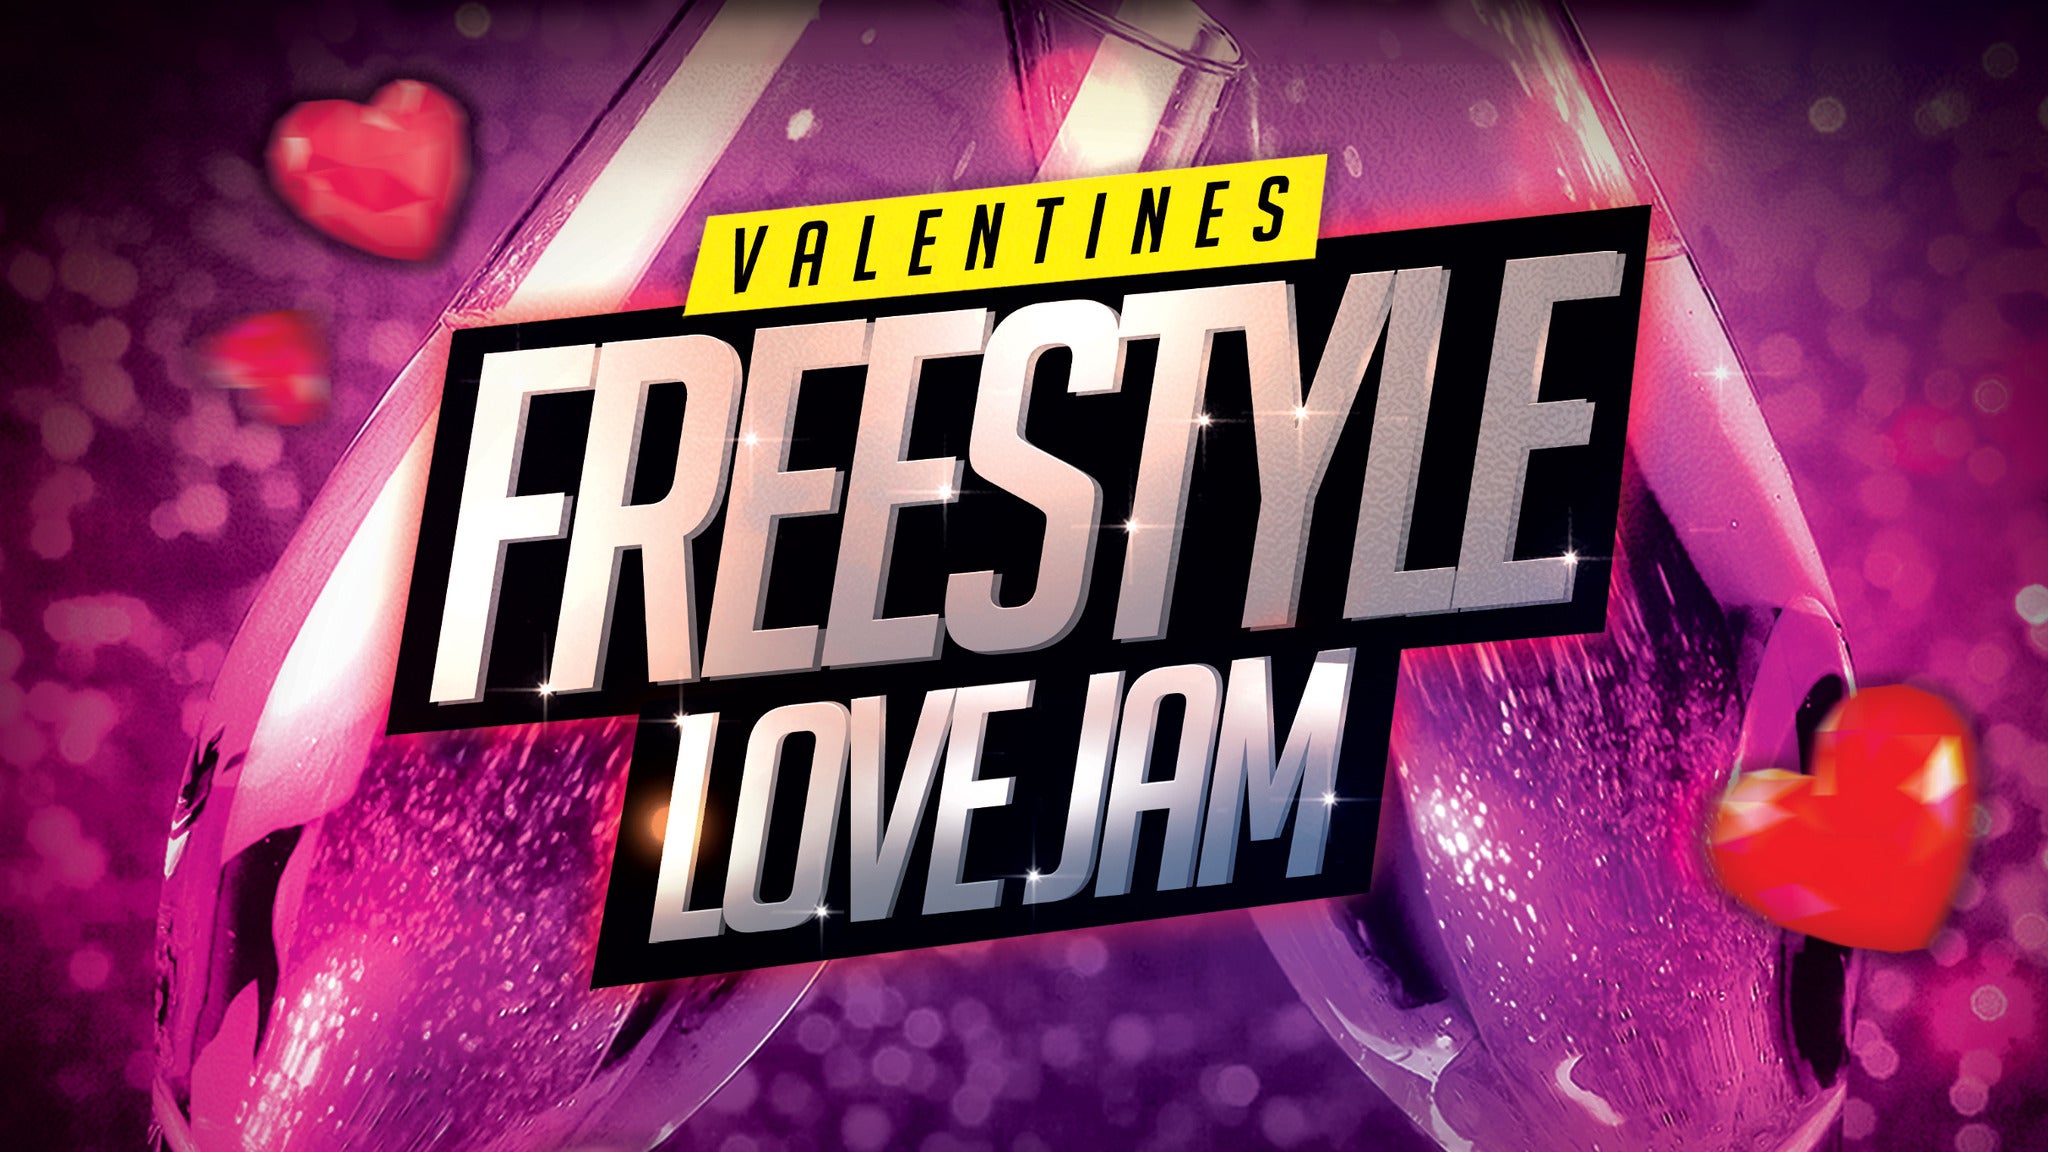 Valentines Freestyle Love Jam presale information on freepresalepasswords.com